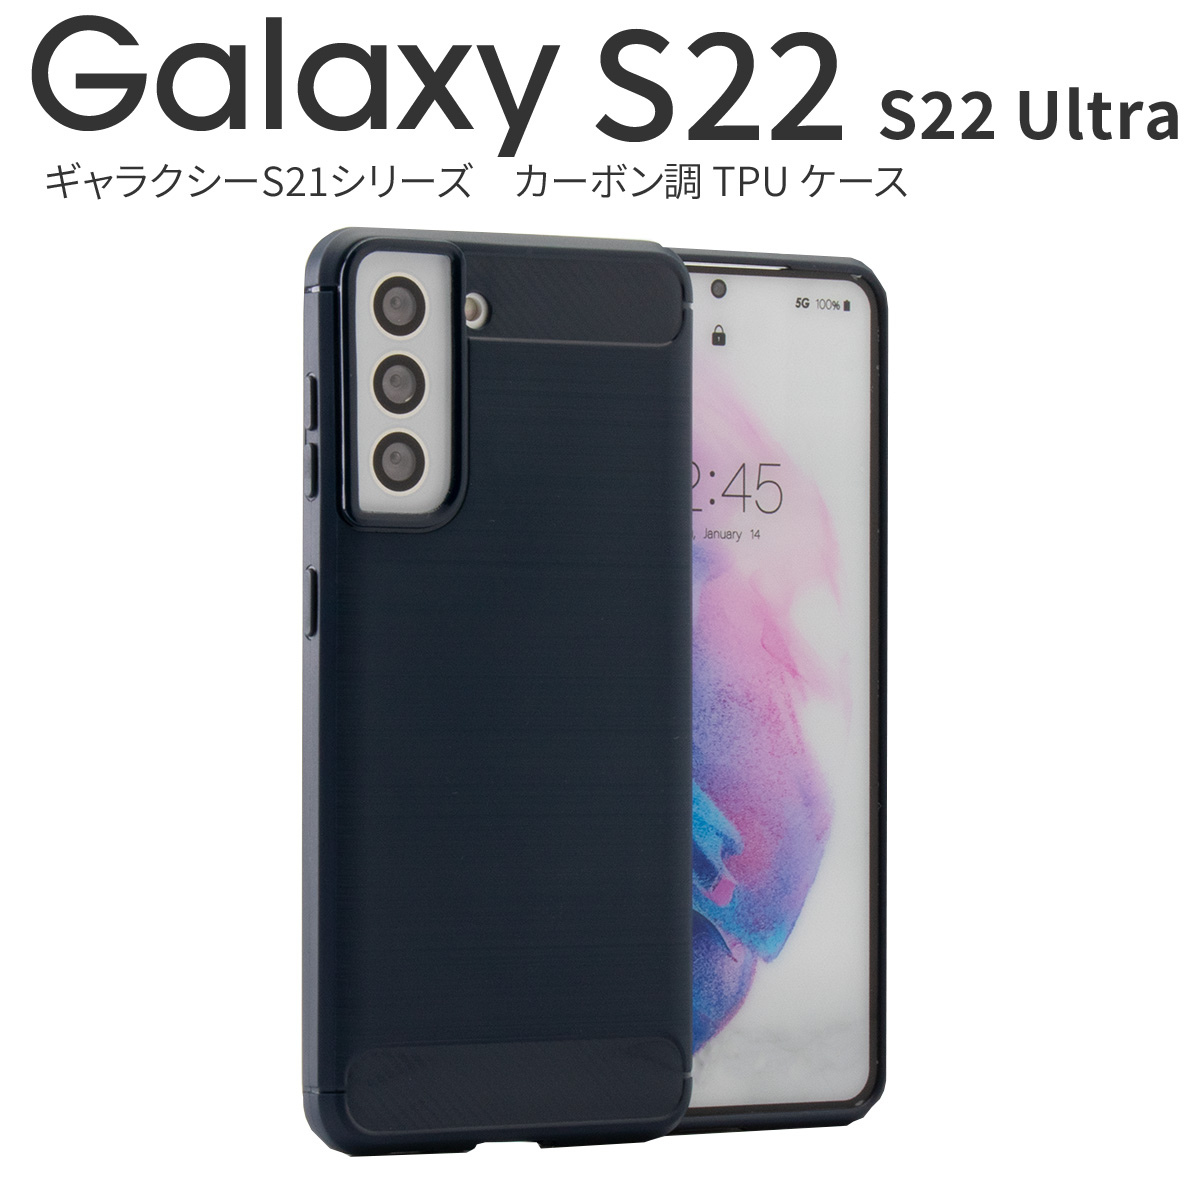 Galaxy S22 Galaxy S22+ Galaxy S22 Ultra カーボン調TPUケース